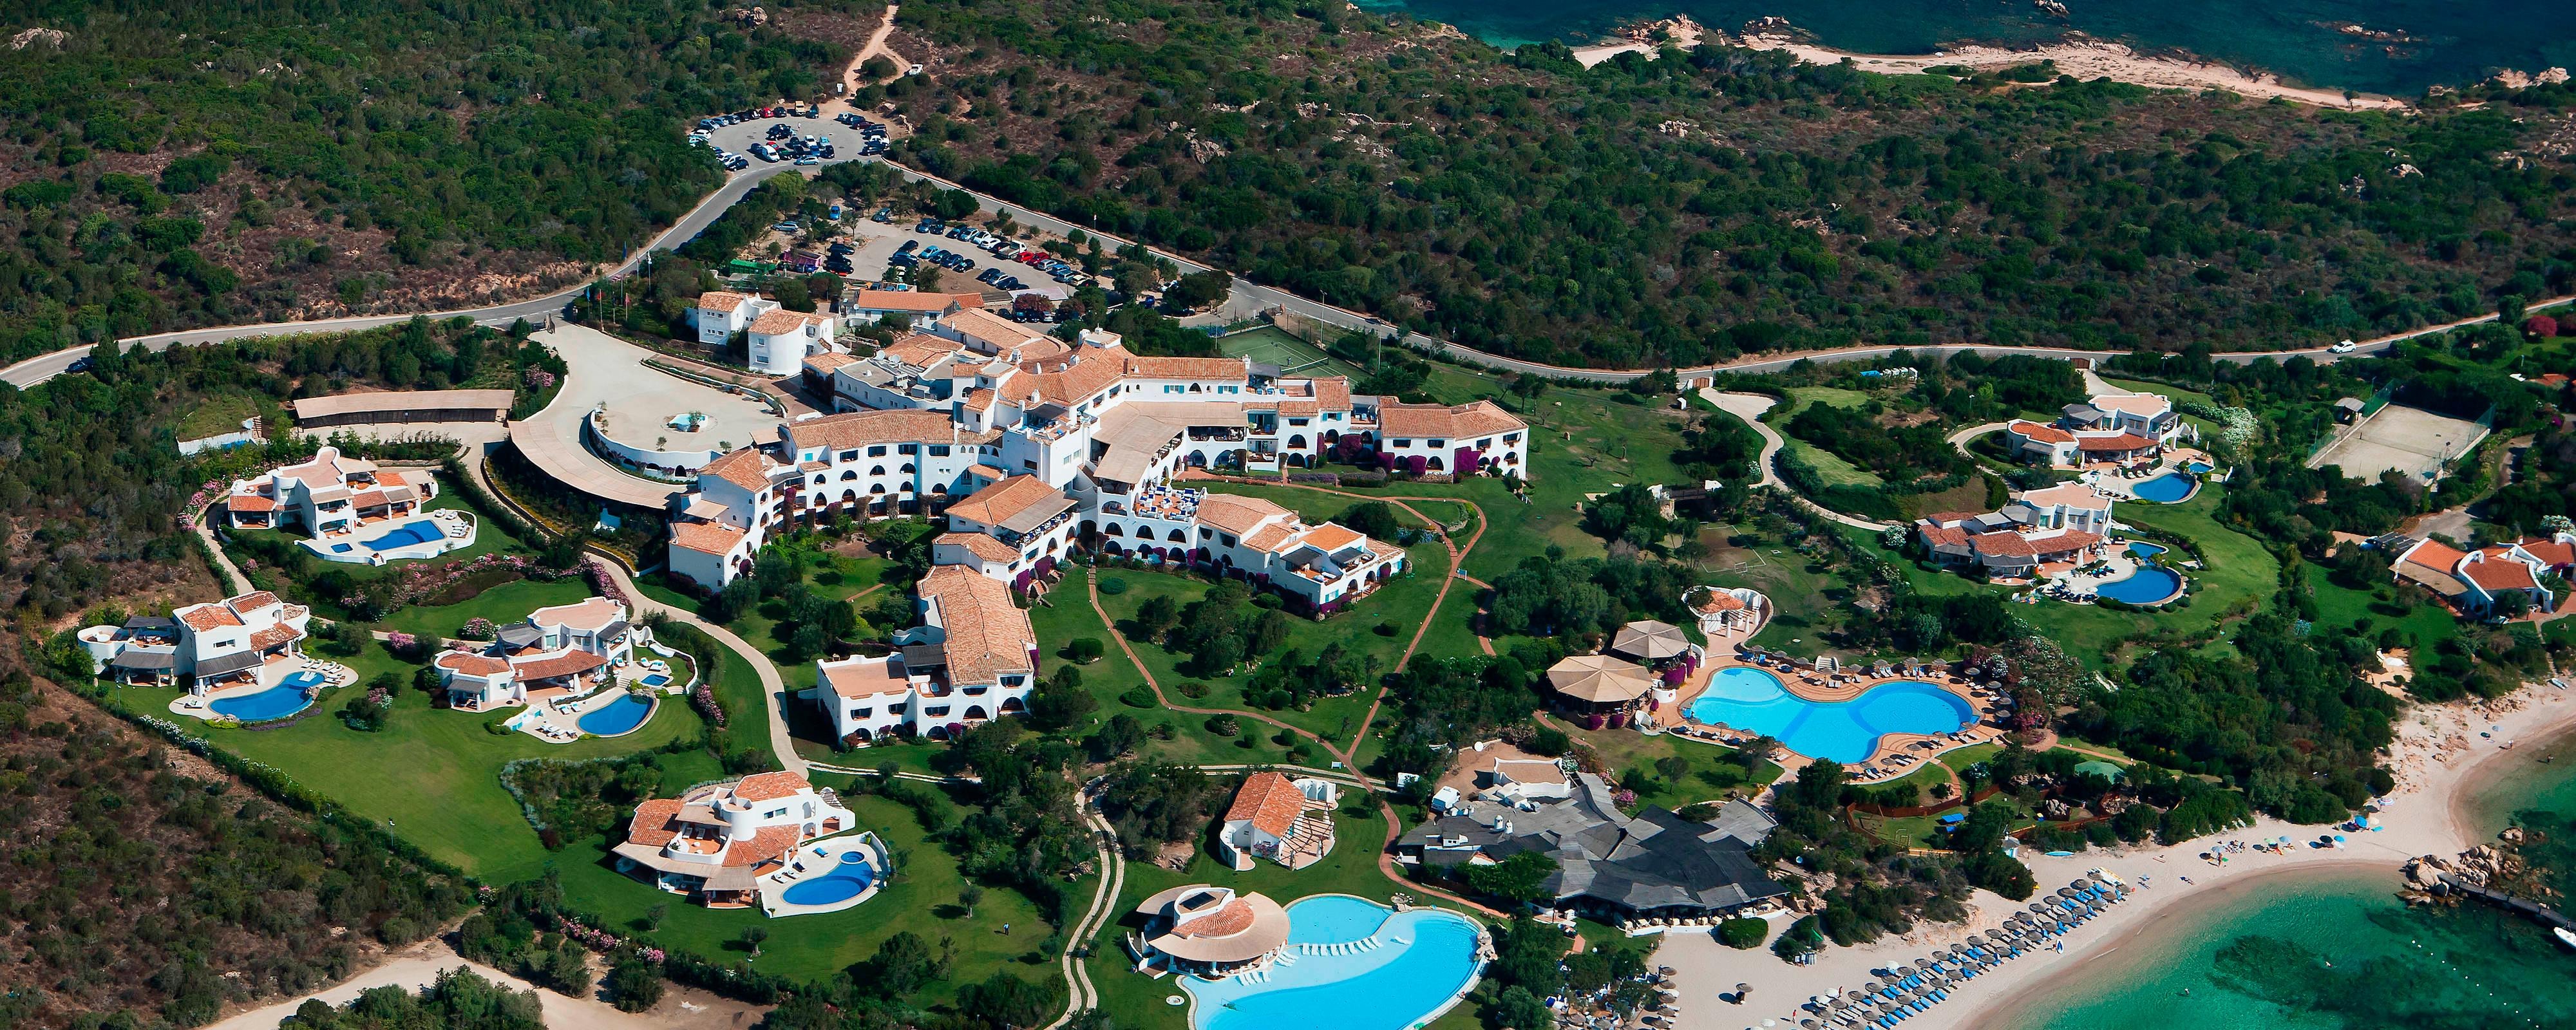 Image for Hotel Romazzino, a Luxury Collection Hotel, Costa Smeralda, a Marriott hotel.